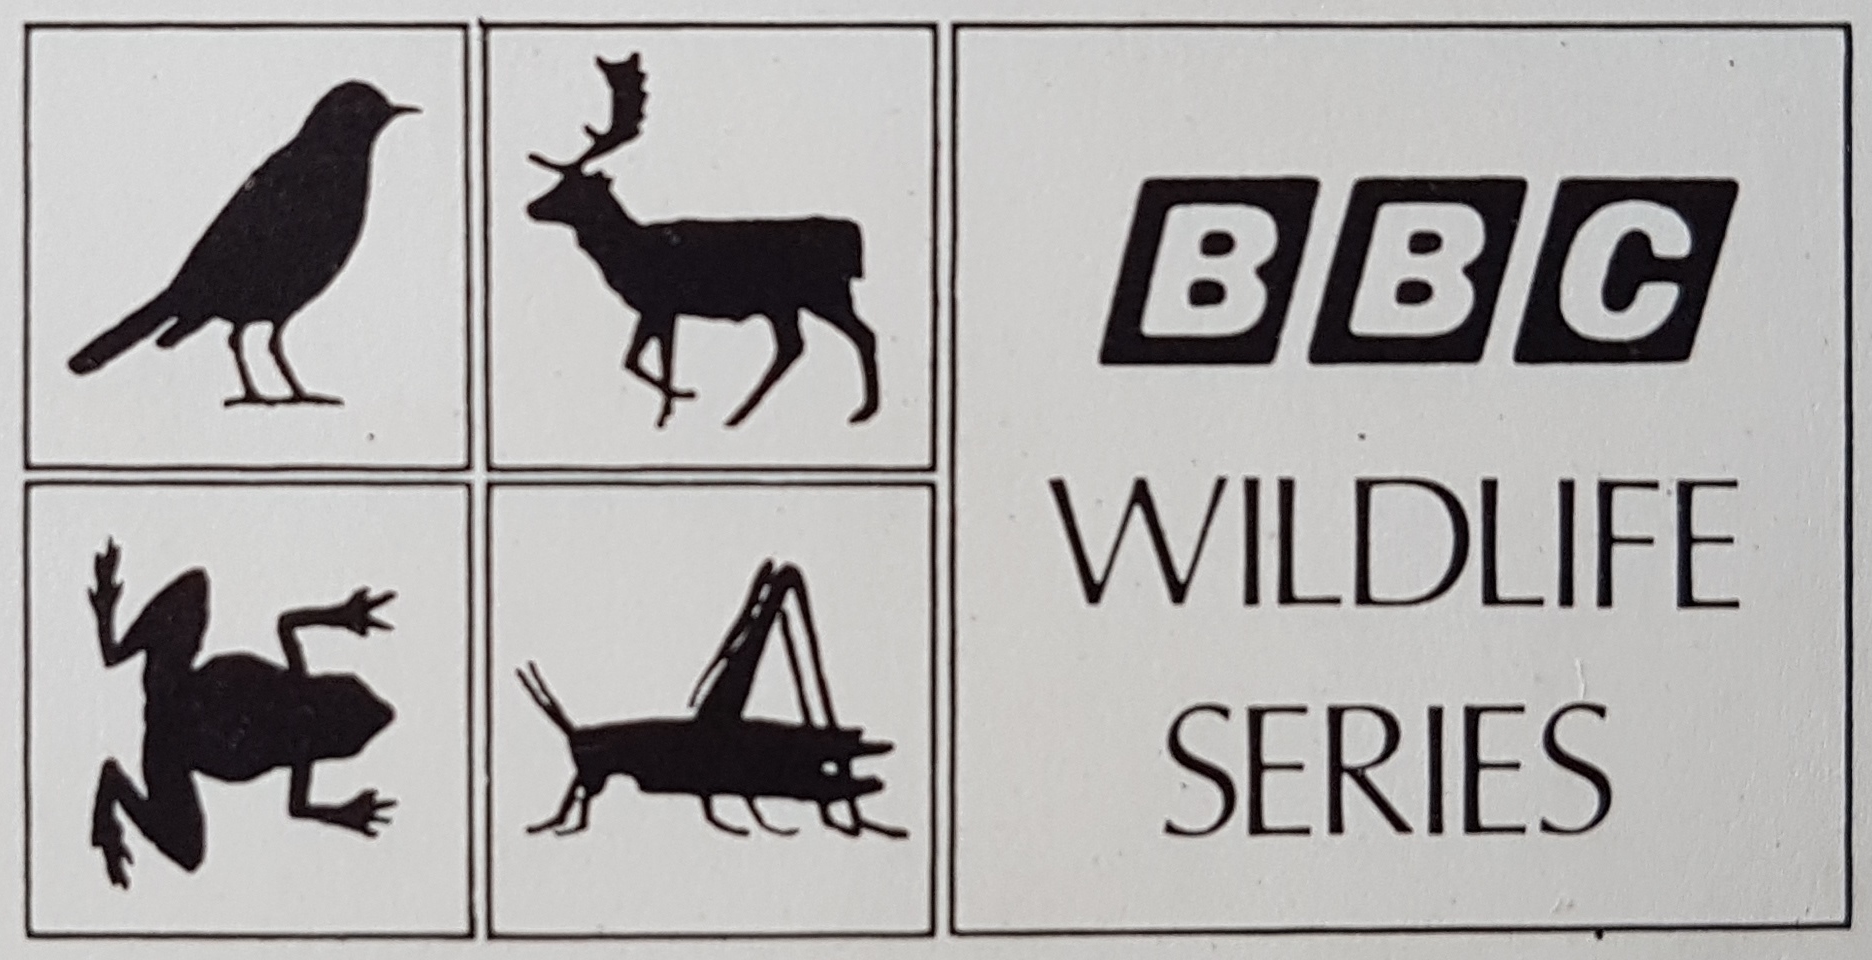 BBC Wildlife Series label